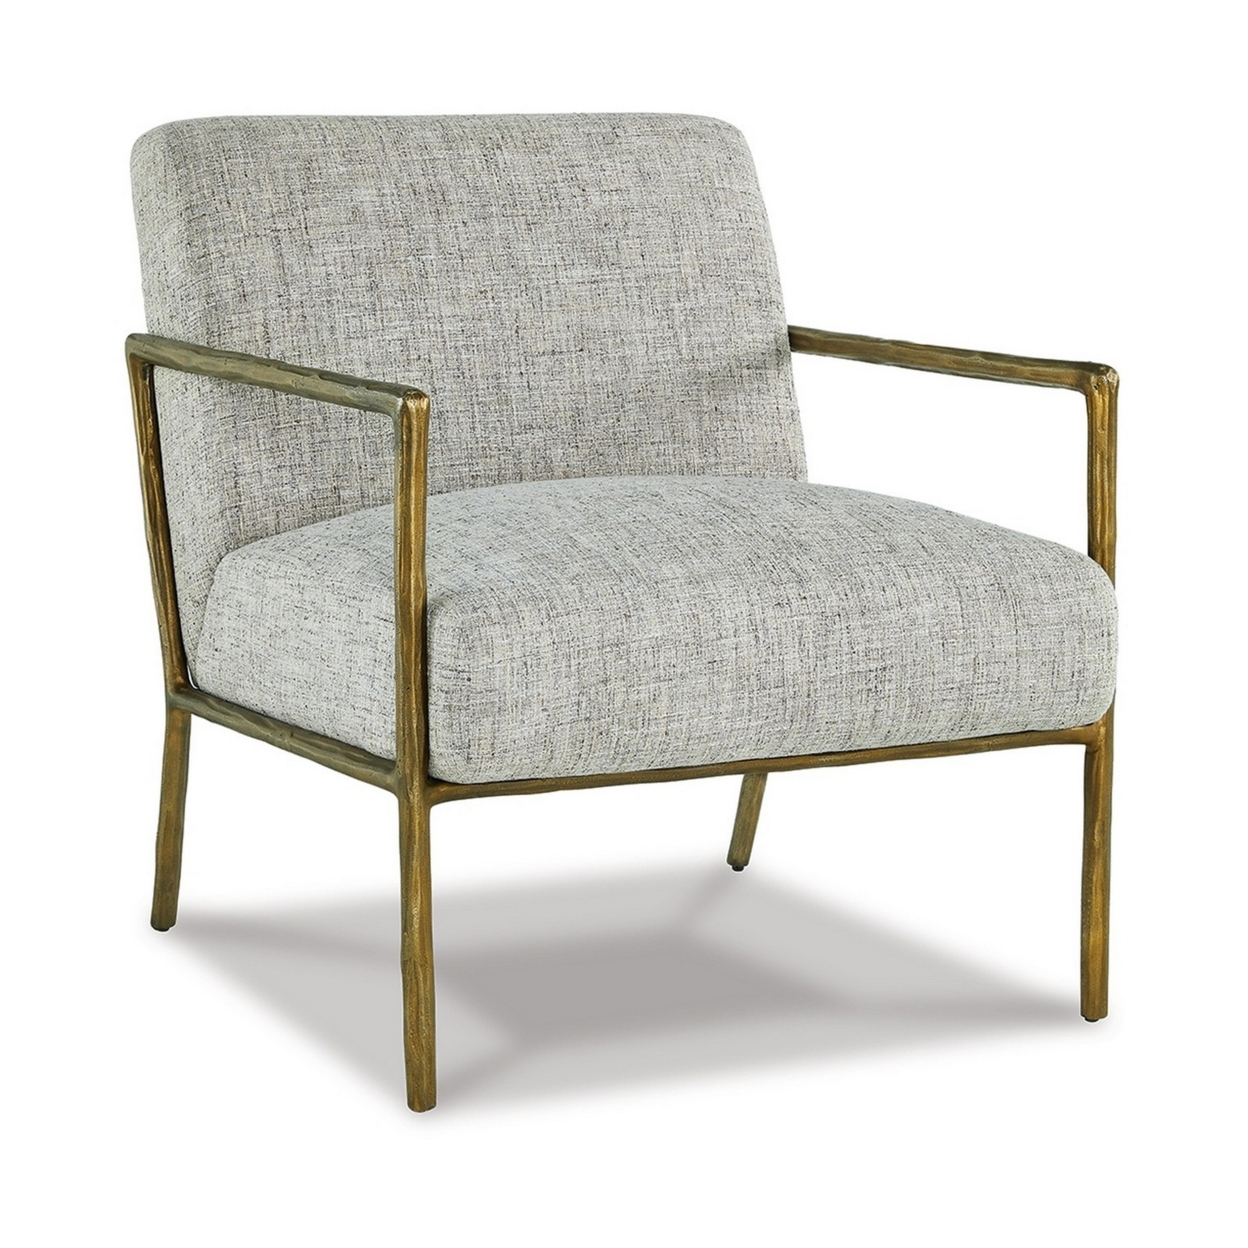 Tusk 30 Inch Accent Chair, Classic Brass Aluminum Frame, Gray Upholstery- Saltoro Sherpi